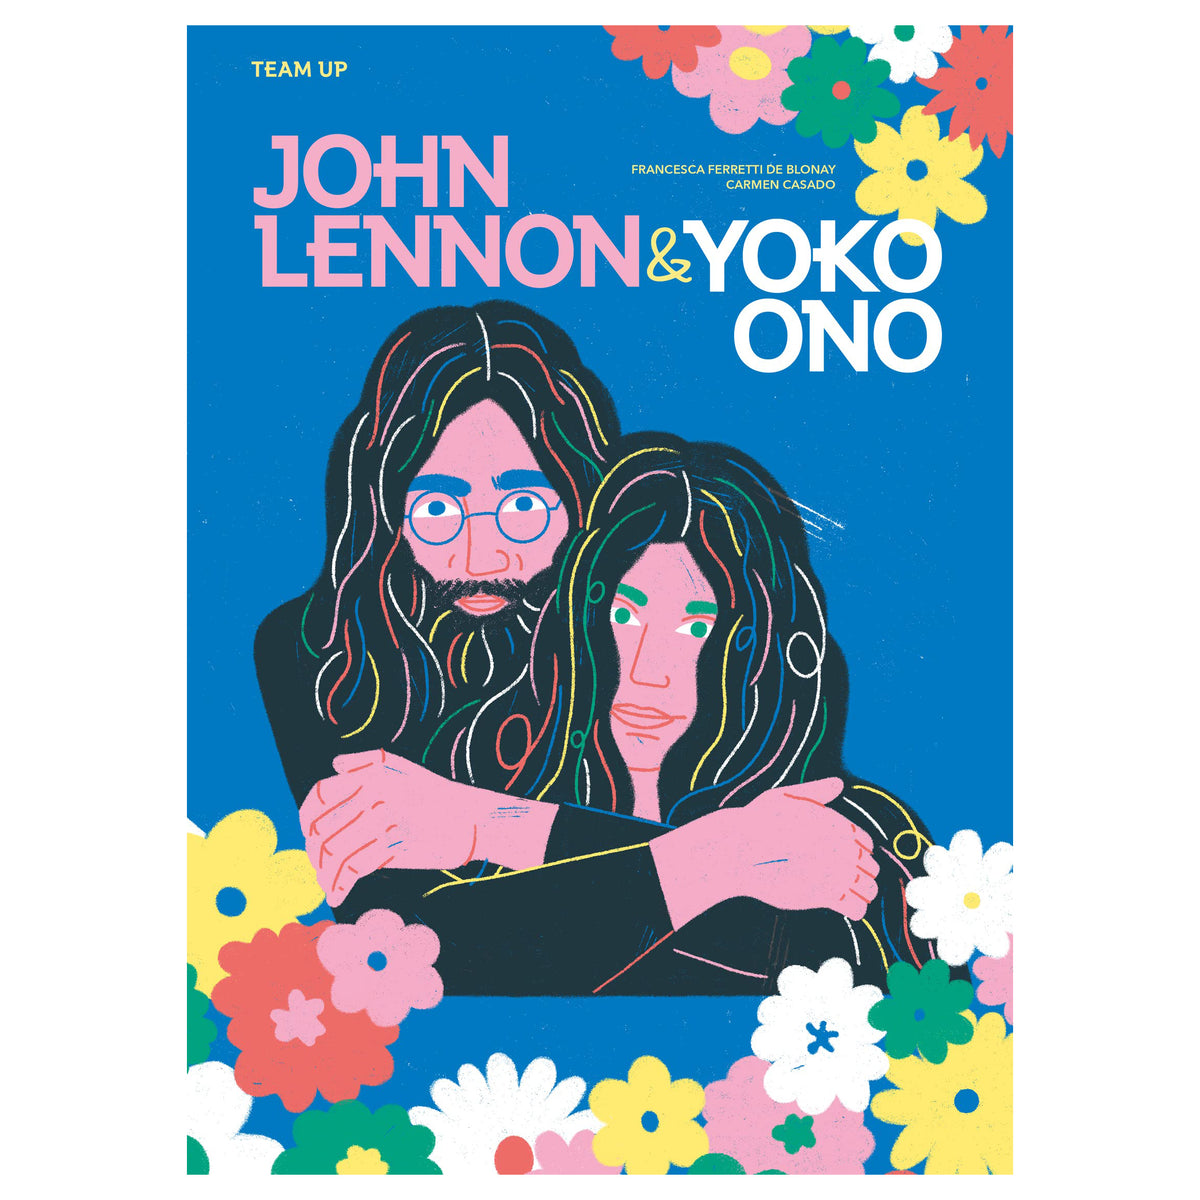 John Lennon & Yoko Ono Team Up